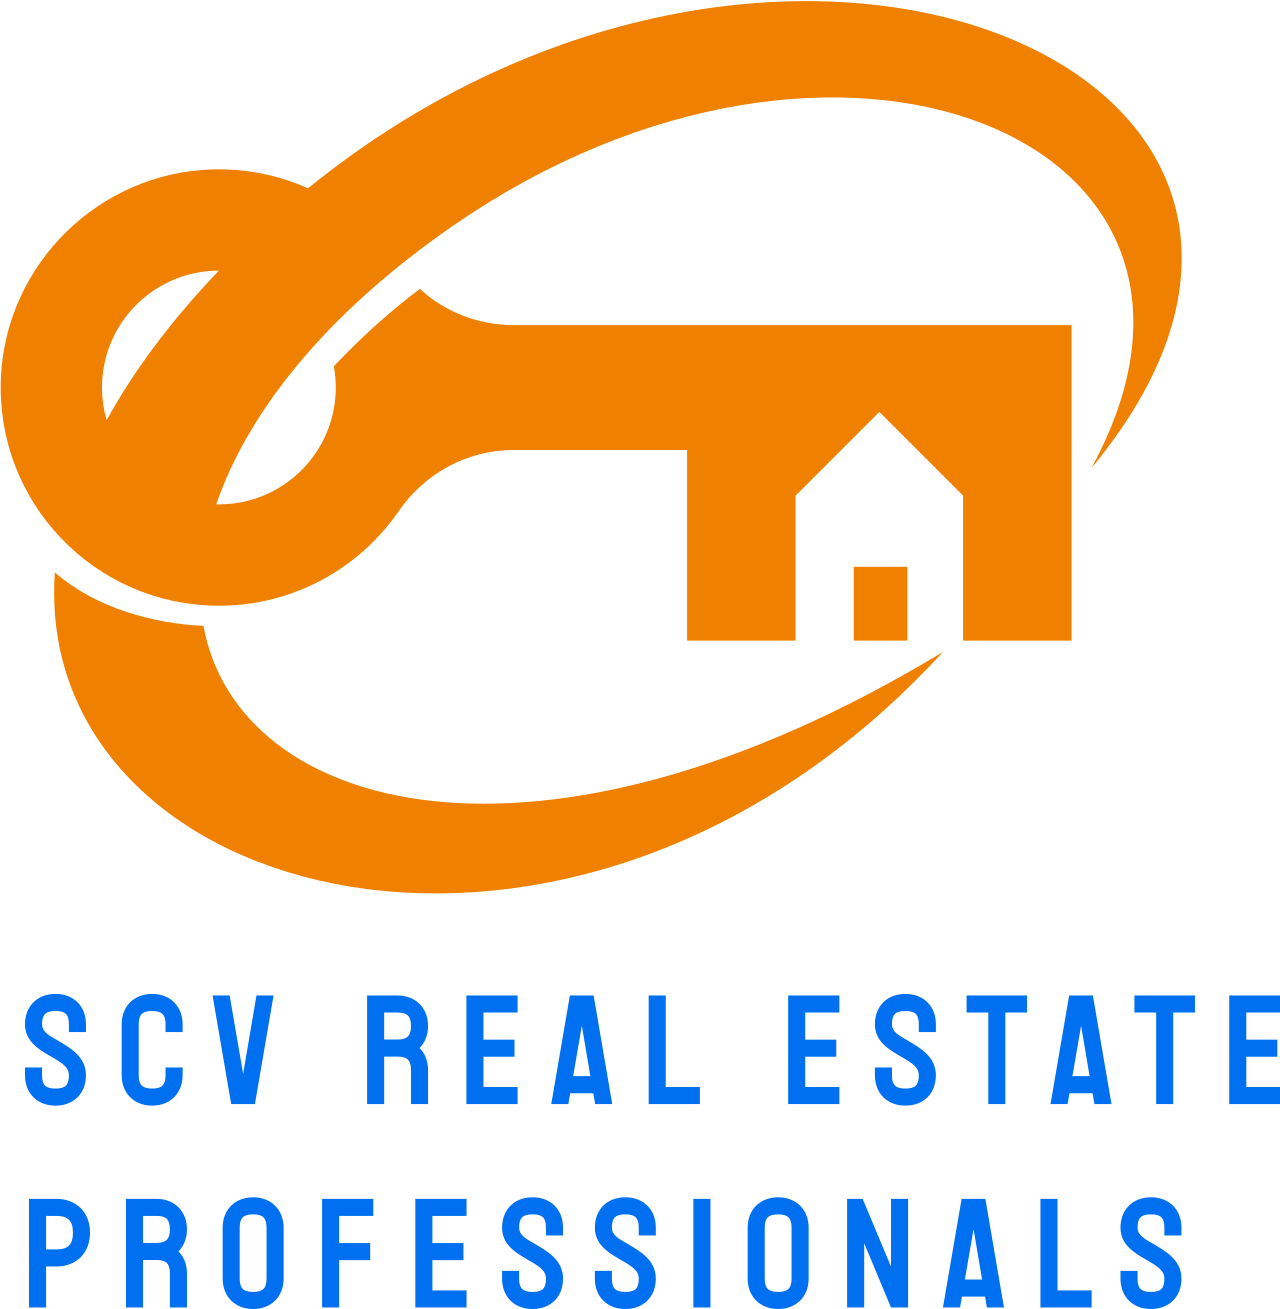 SCV Real Estate 
Professionals's logo